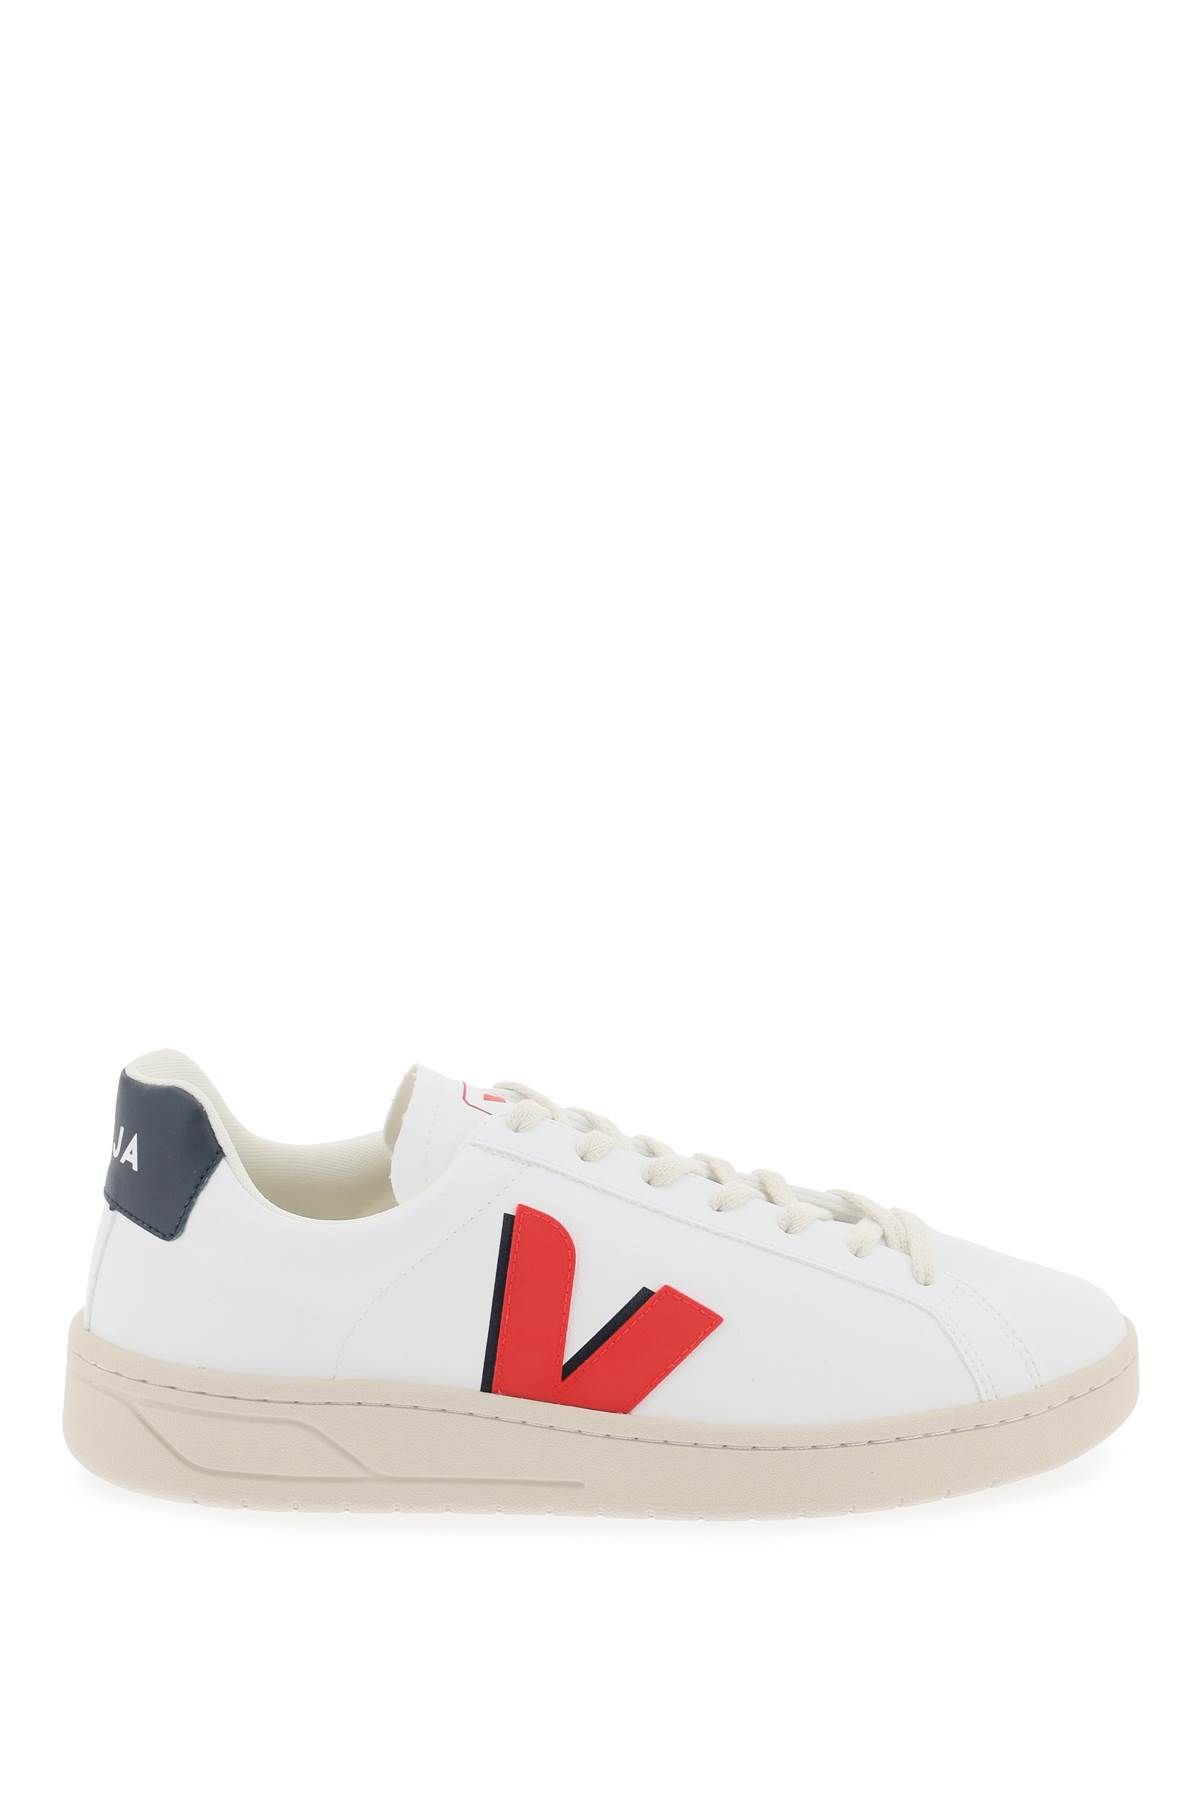 Shop Veja C.w.l. Urca Vegan Sneakers In White,red,blue